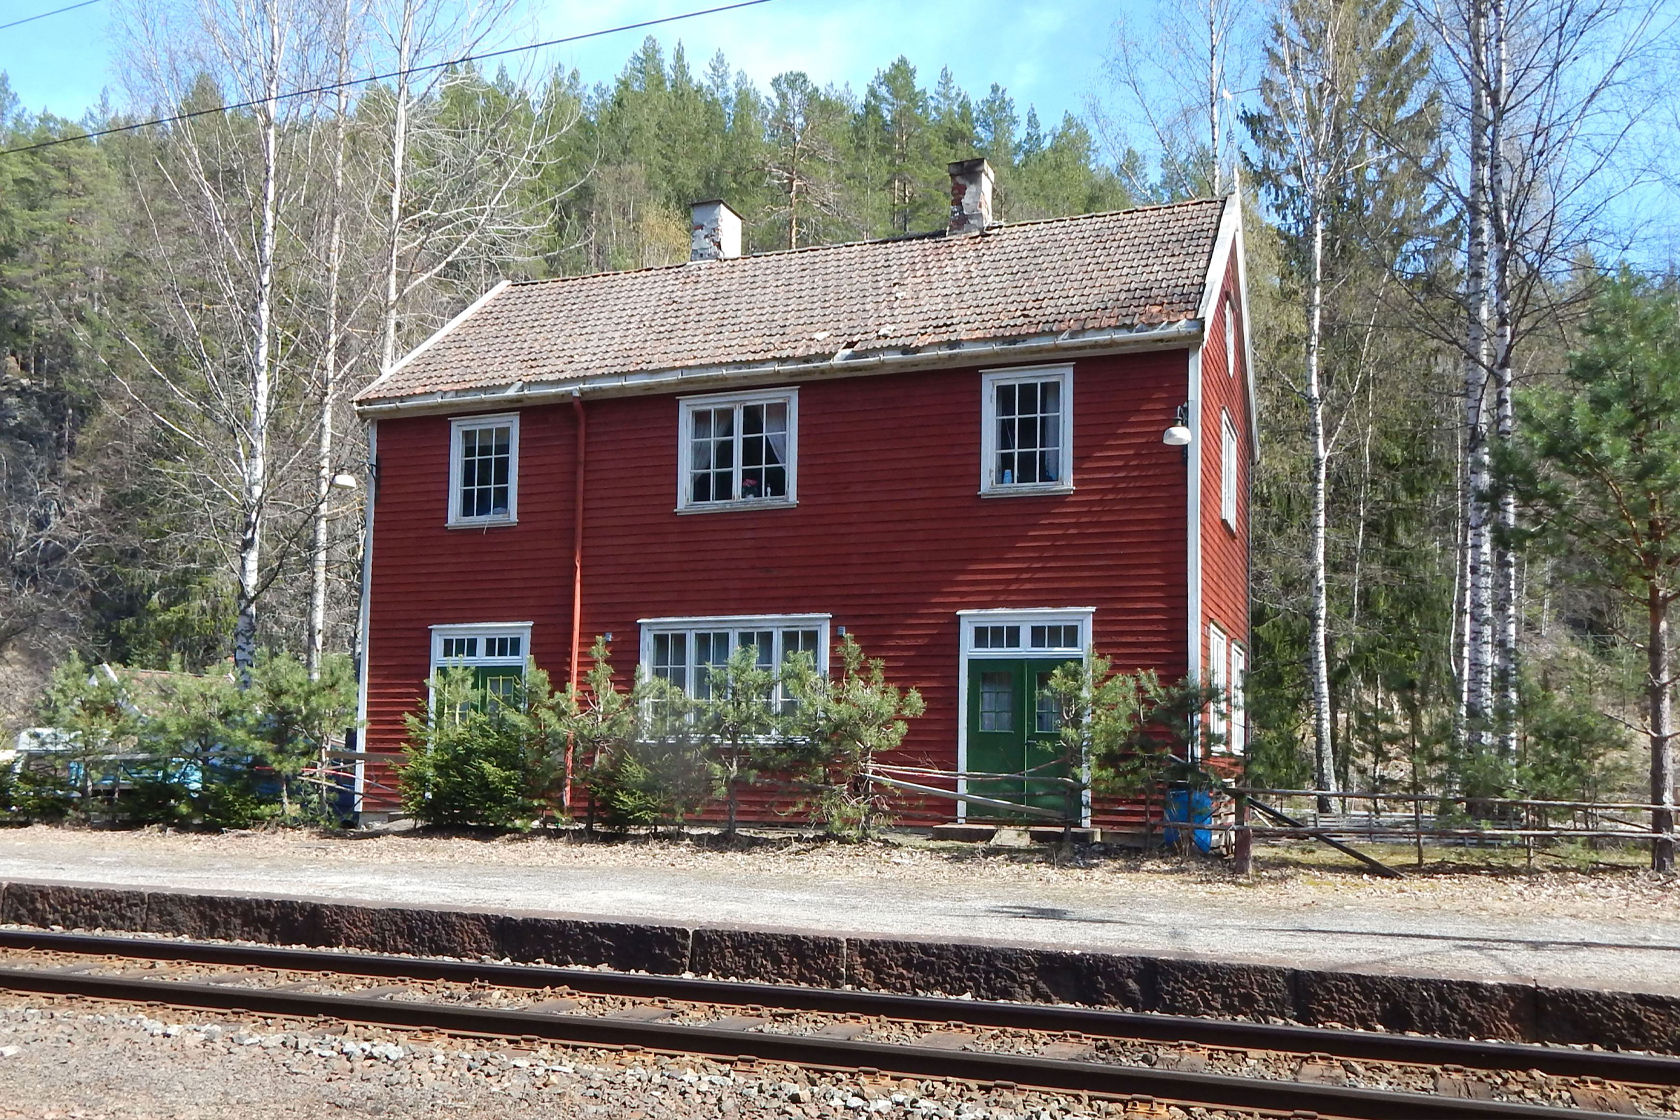 Tracks and station building at Valebø station